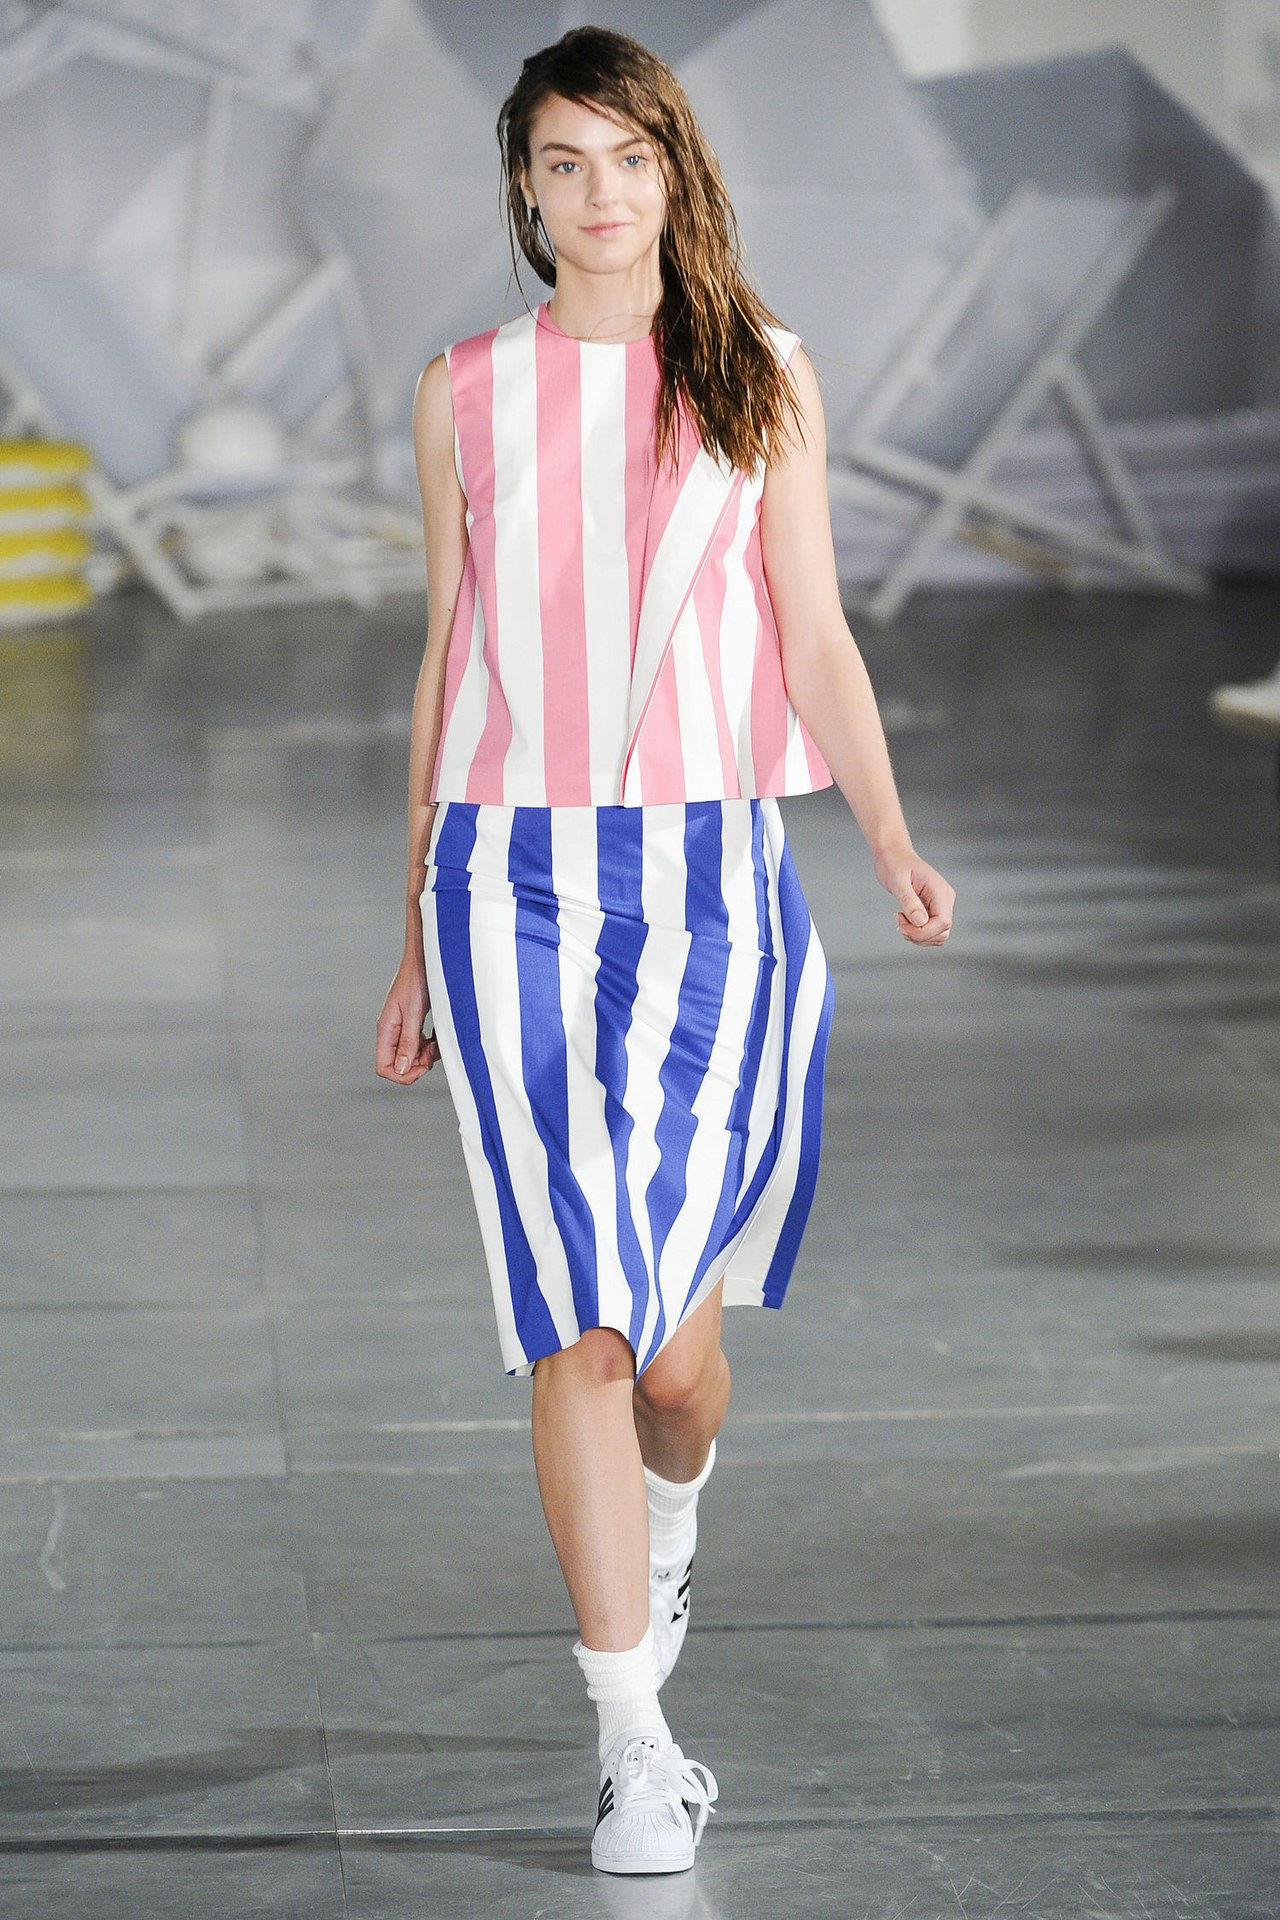 jacquemus spring 15 striped top skirt